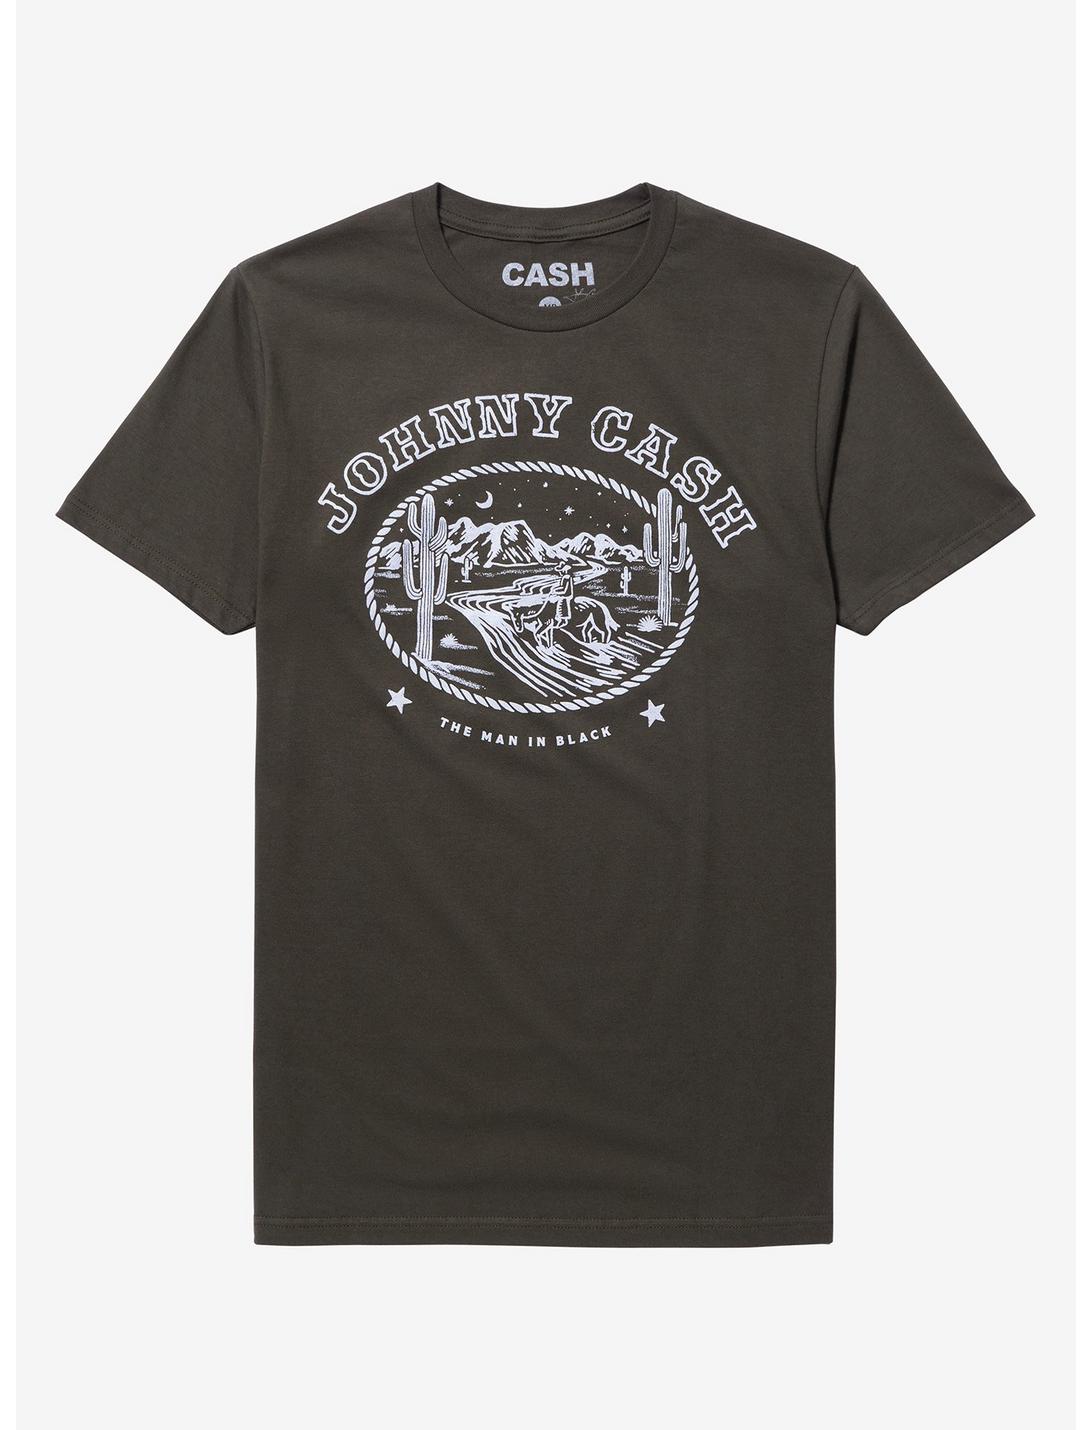 Johnny Cash The Man In Black Desert Boyfriend Fit Girls T-Shirt, MILITARY GREEN, hi-res